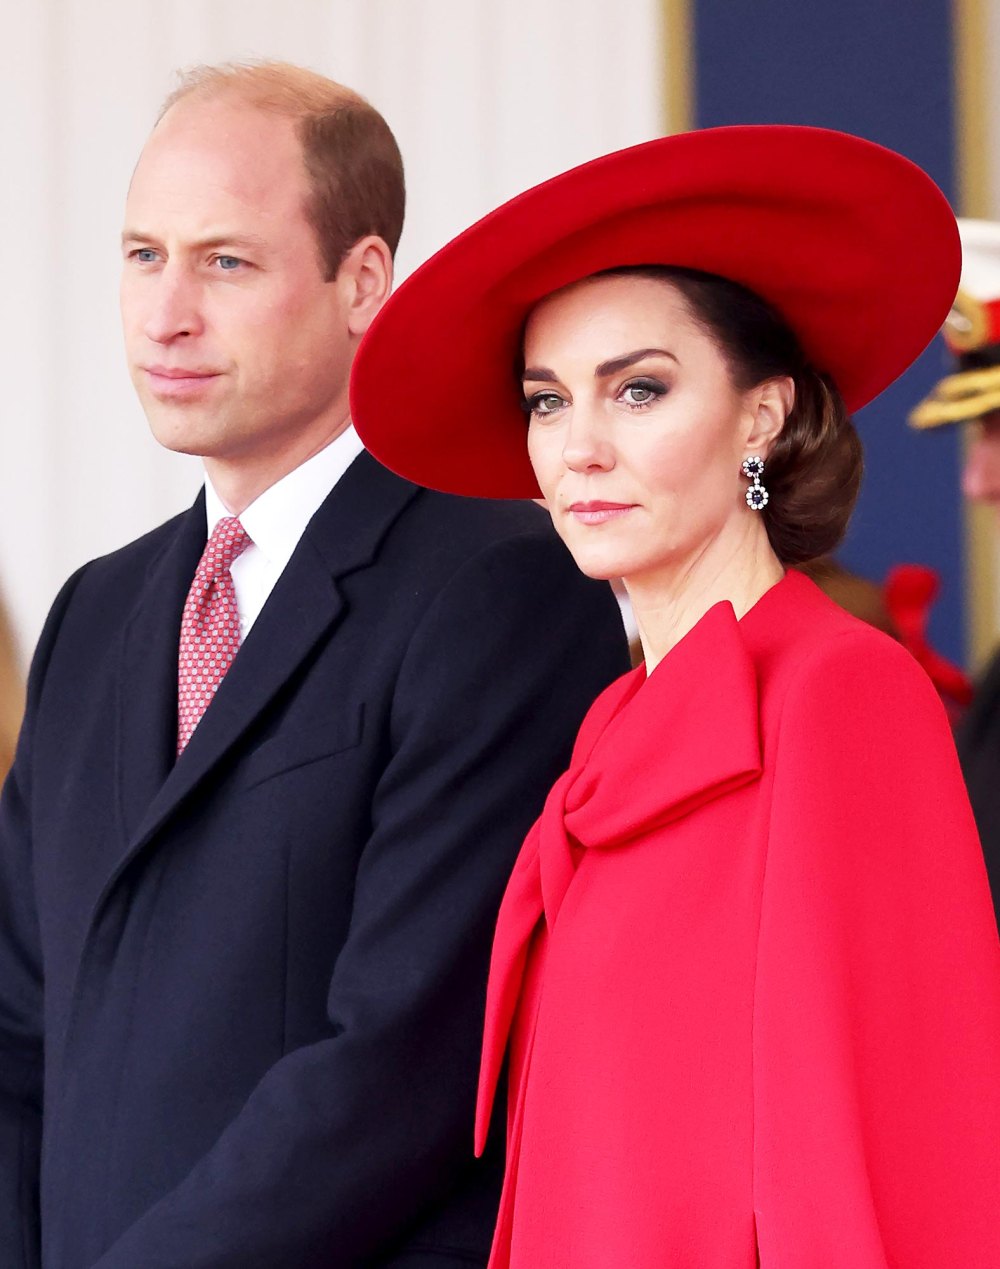 Will Kate Middleton Attend the Royal Family Easter Celebration